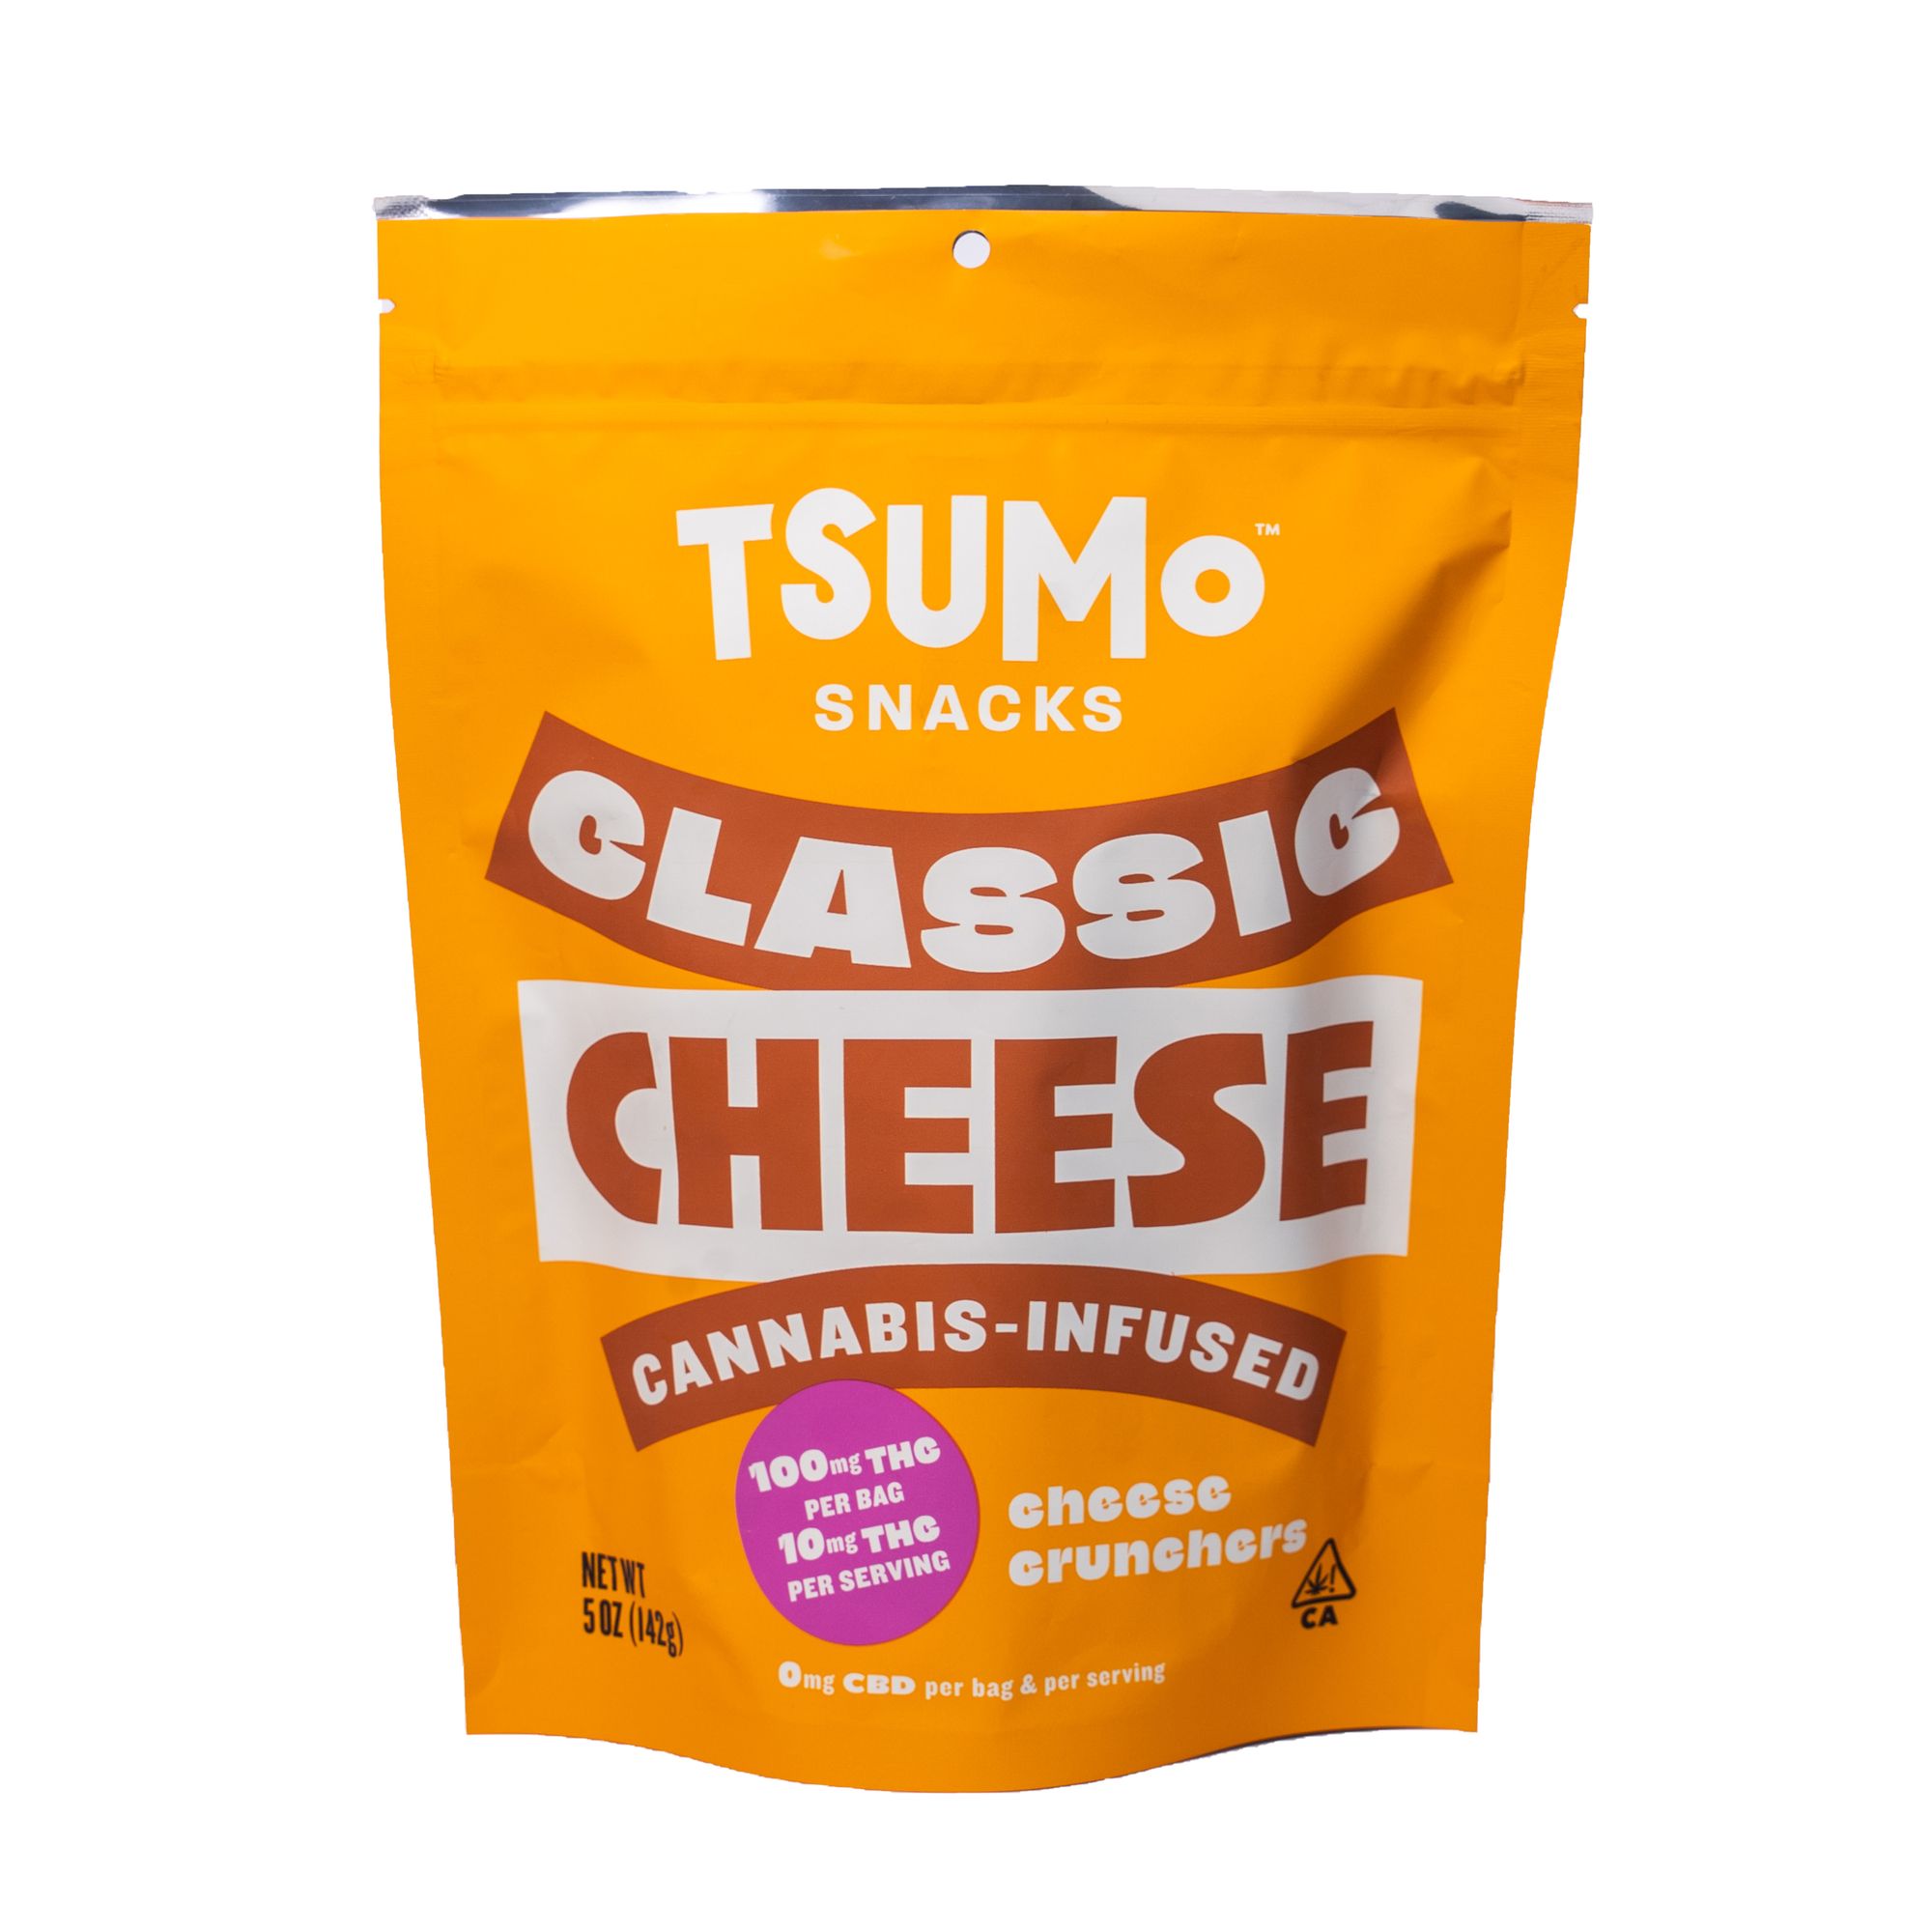 TSUMoSNACKS CLASSIC CHEESE - Cheese Crunchers - 100mg Multiserve